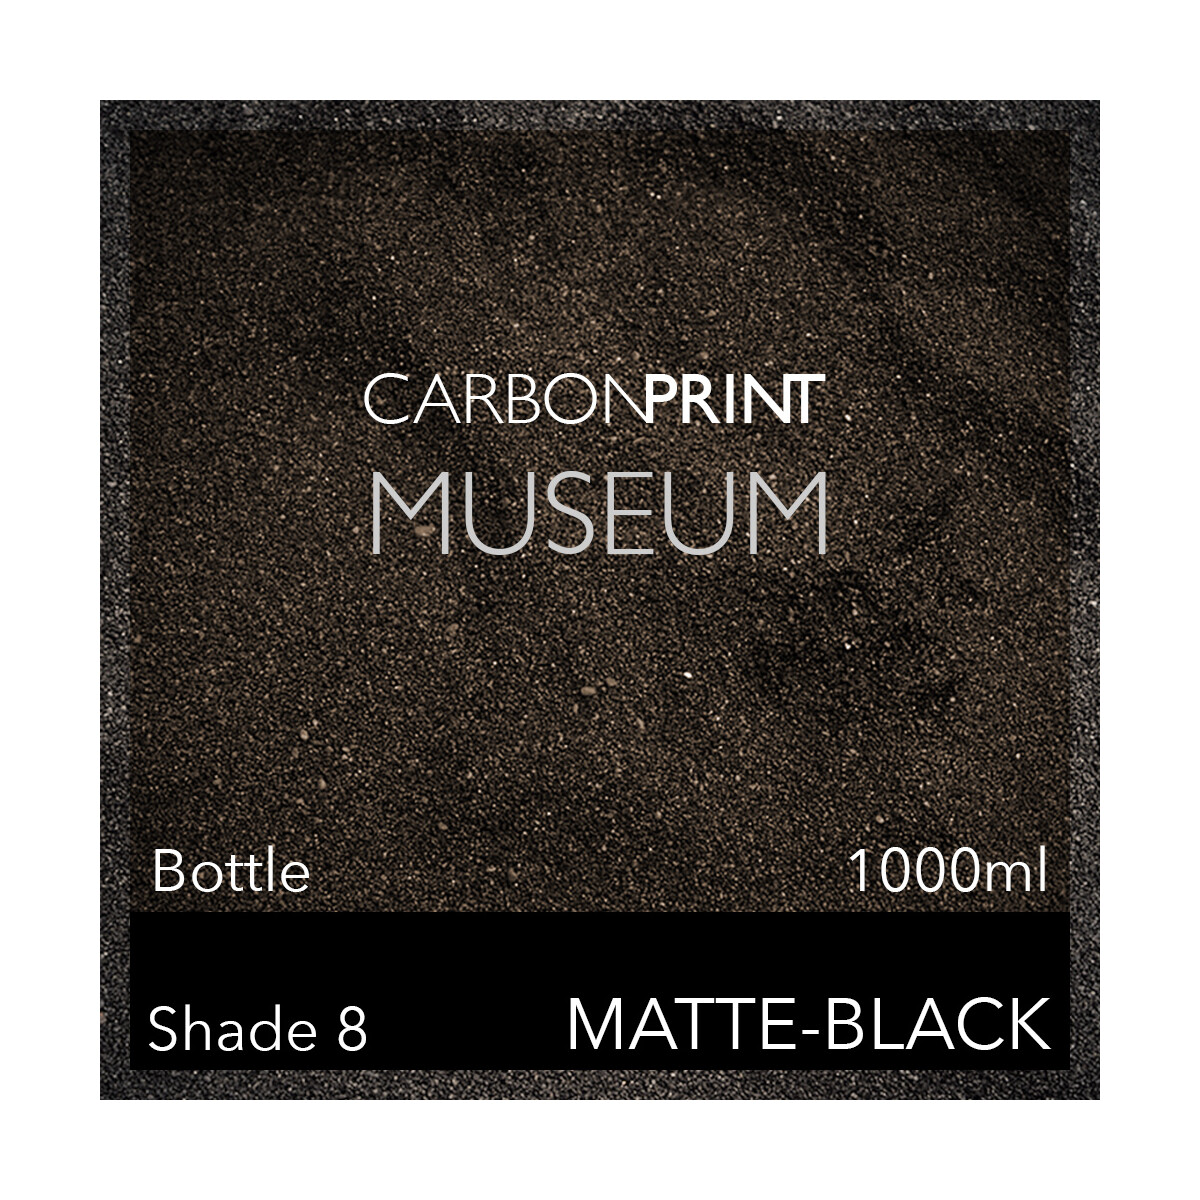 Carbonprint Museum Shade8 Kanal MK 1000ml